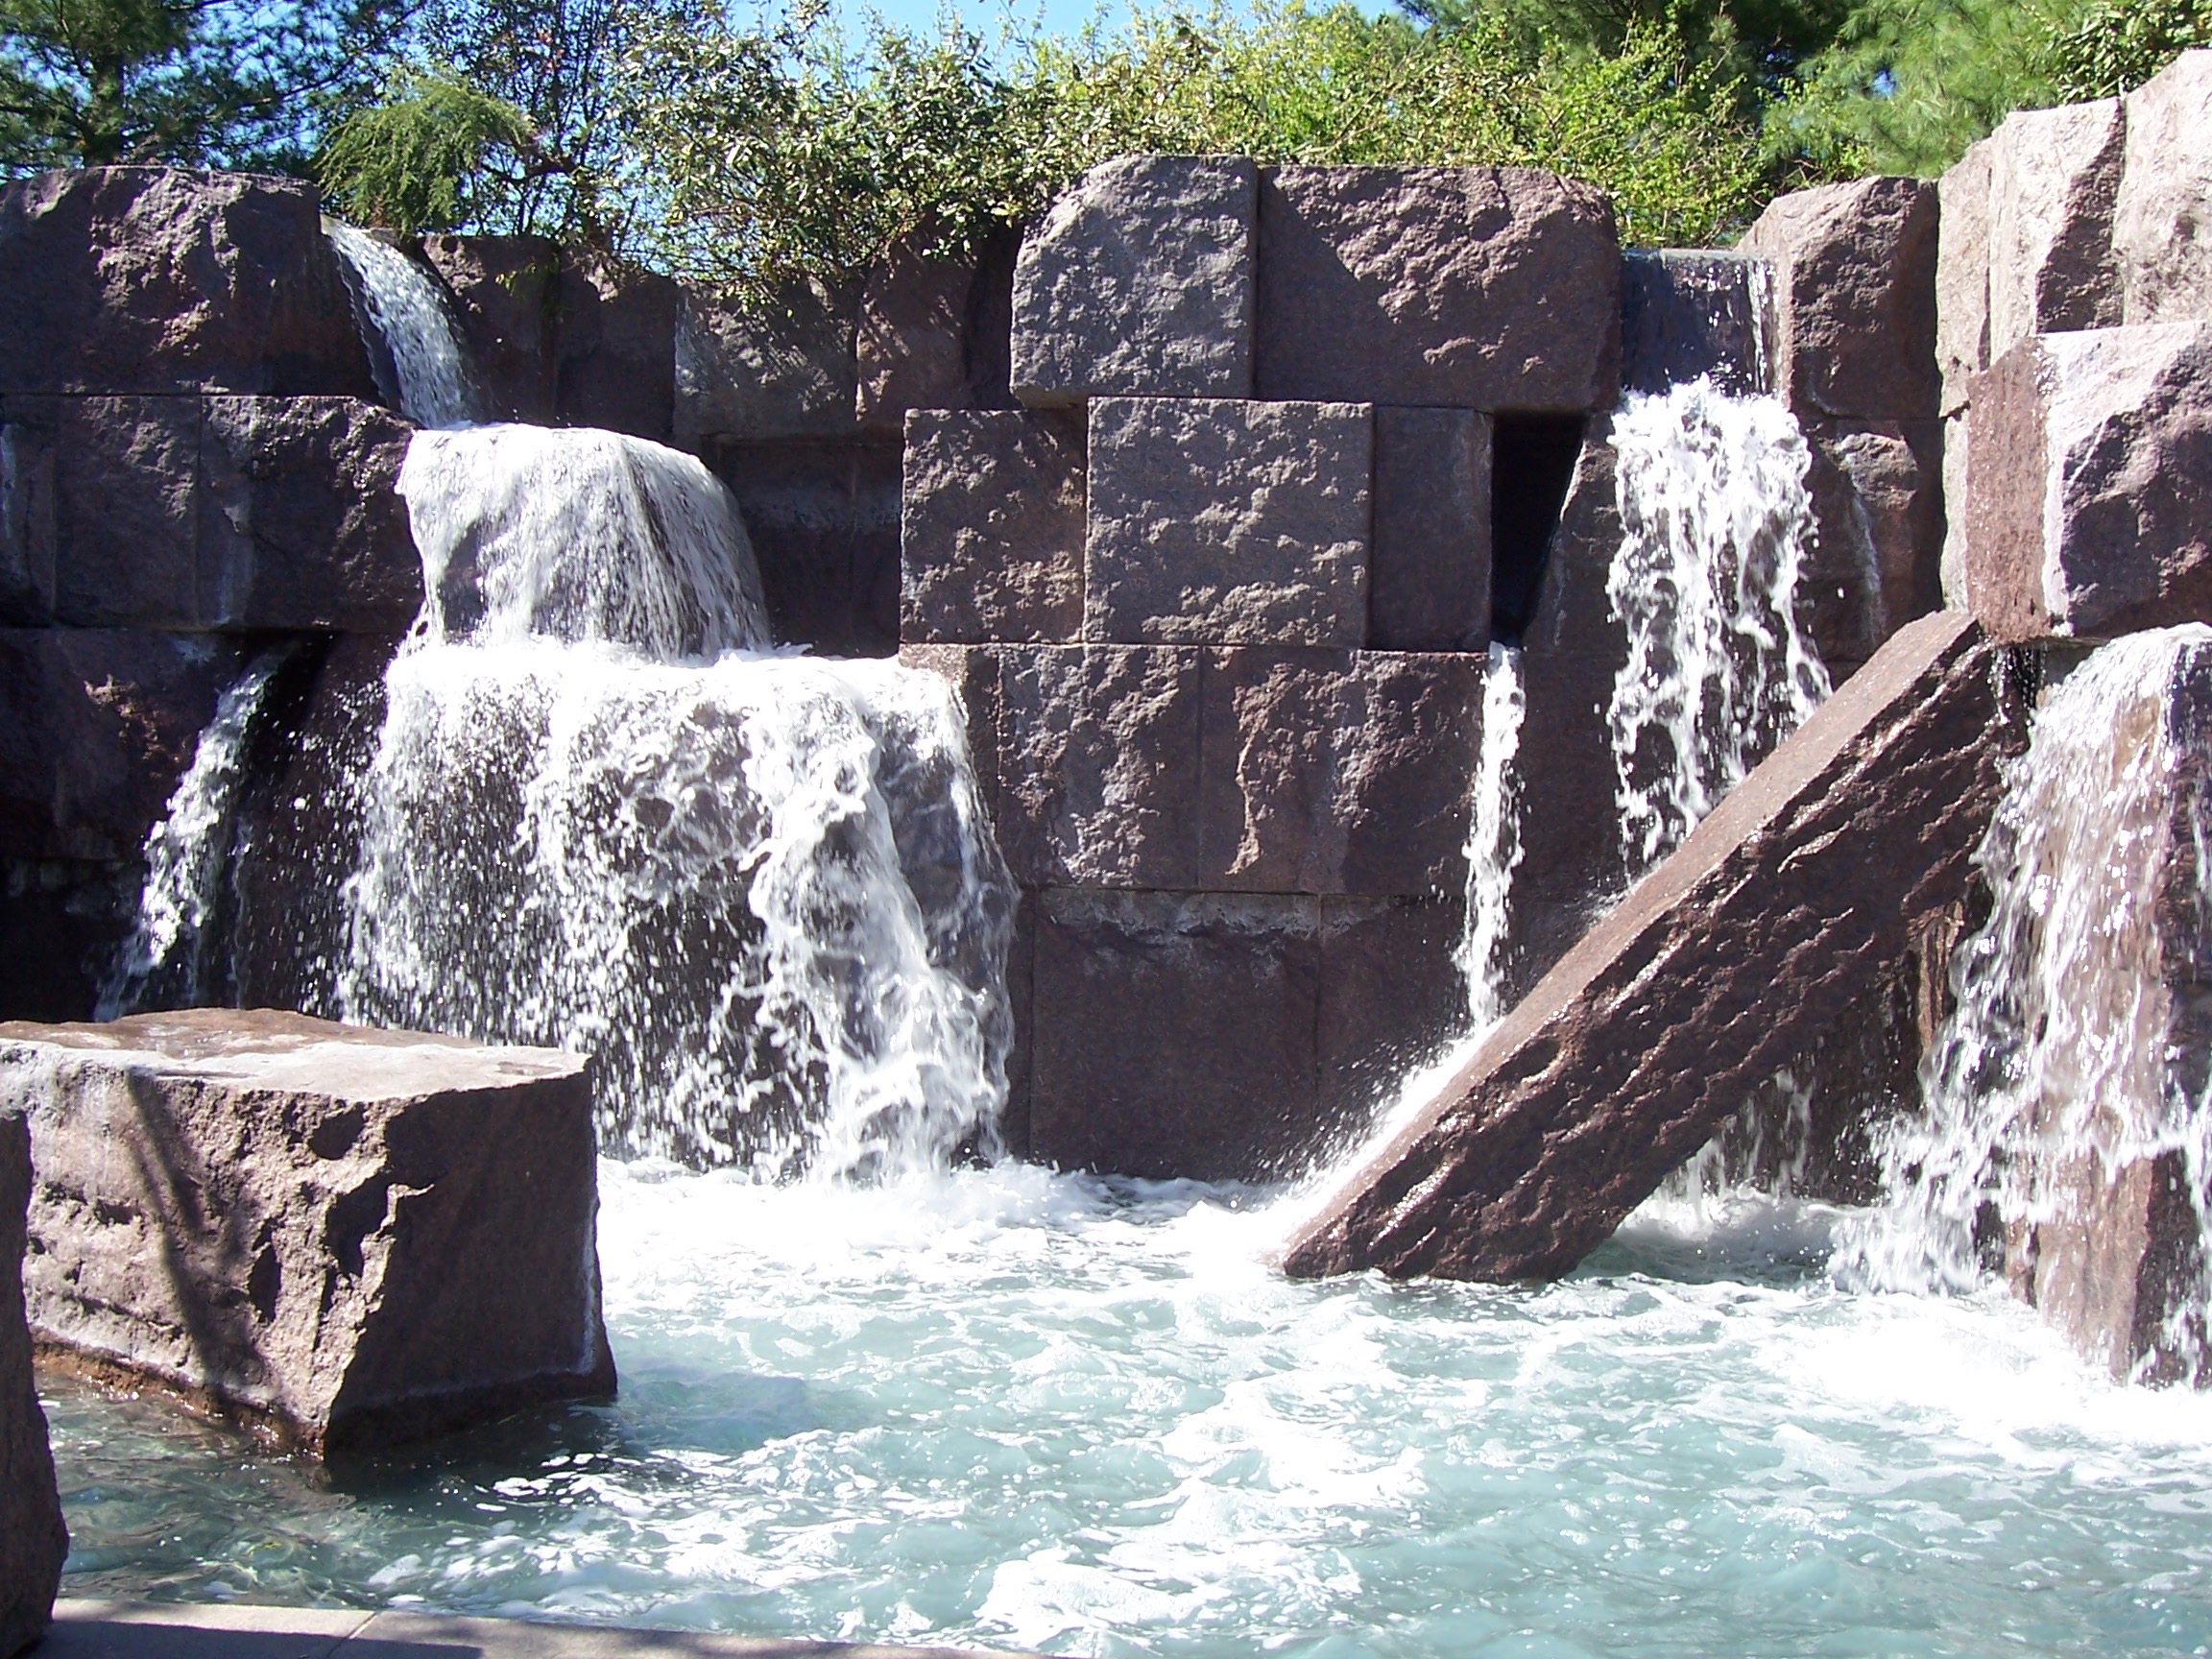 File:Franklin Roosevelt Memorial waterfall.jpg - Wikimedia Commons